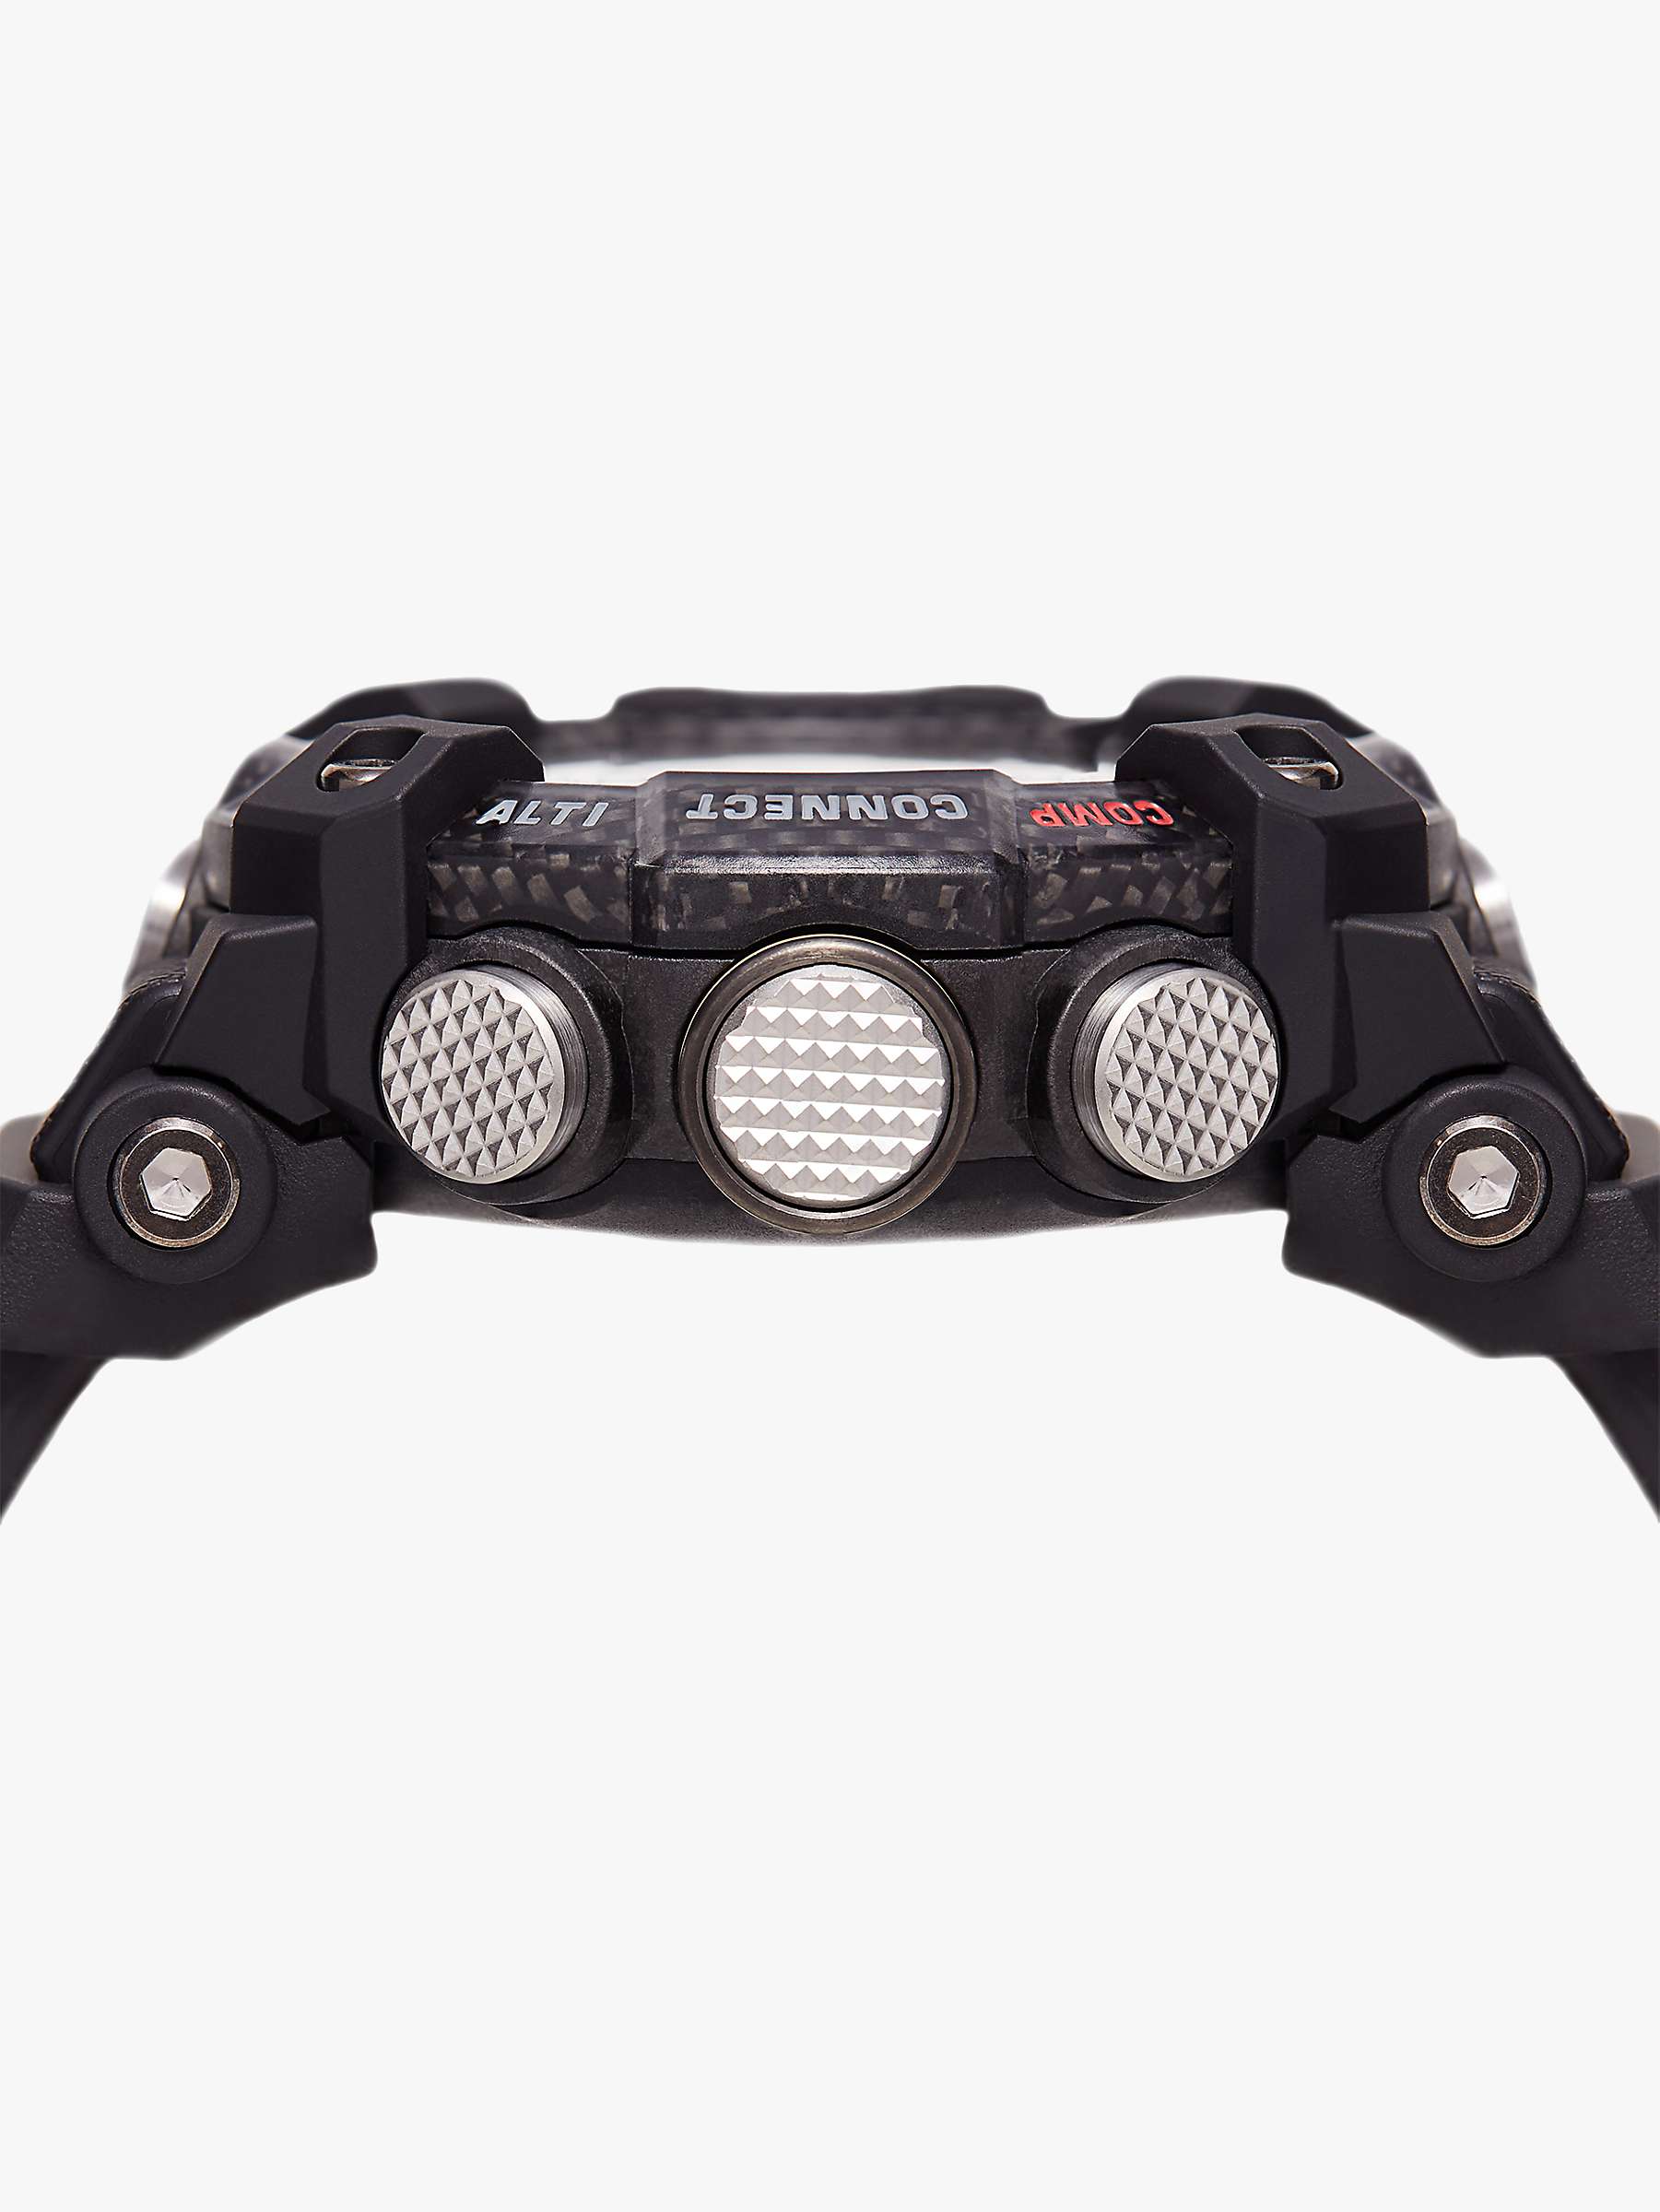 Buy G-Shock Men's Master of G Mudmaster Bluetooth Day Resin Strap Watch Online at johnlewis.com